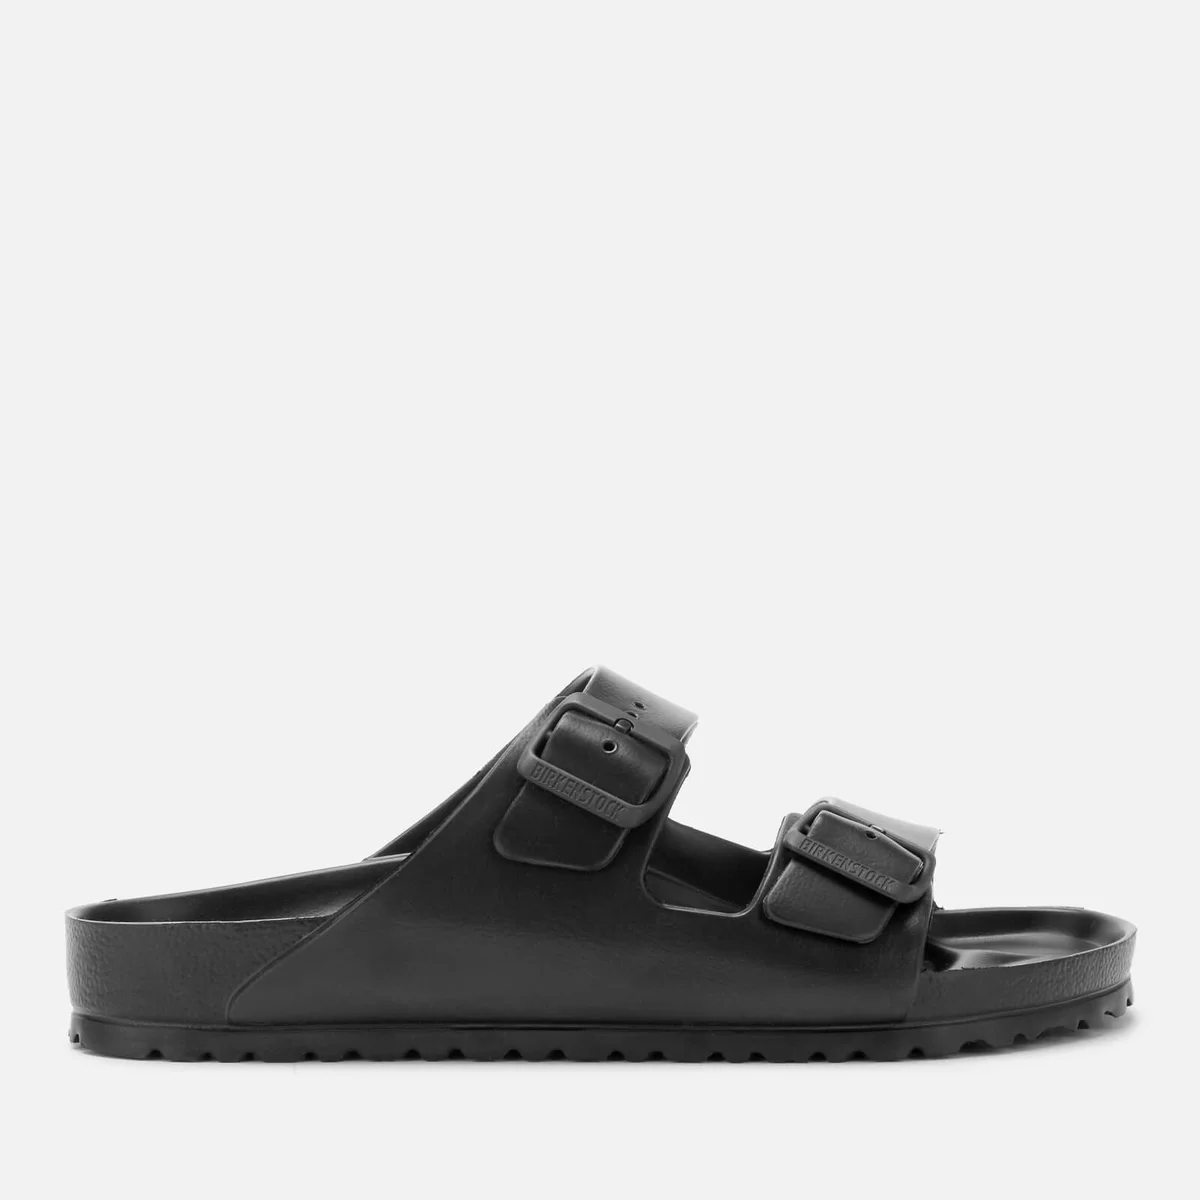 Birkenstock Men's Arizona Eva Double Strap Sandals - Black Image 1